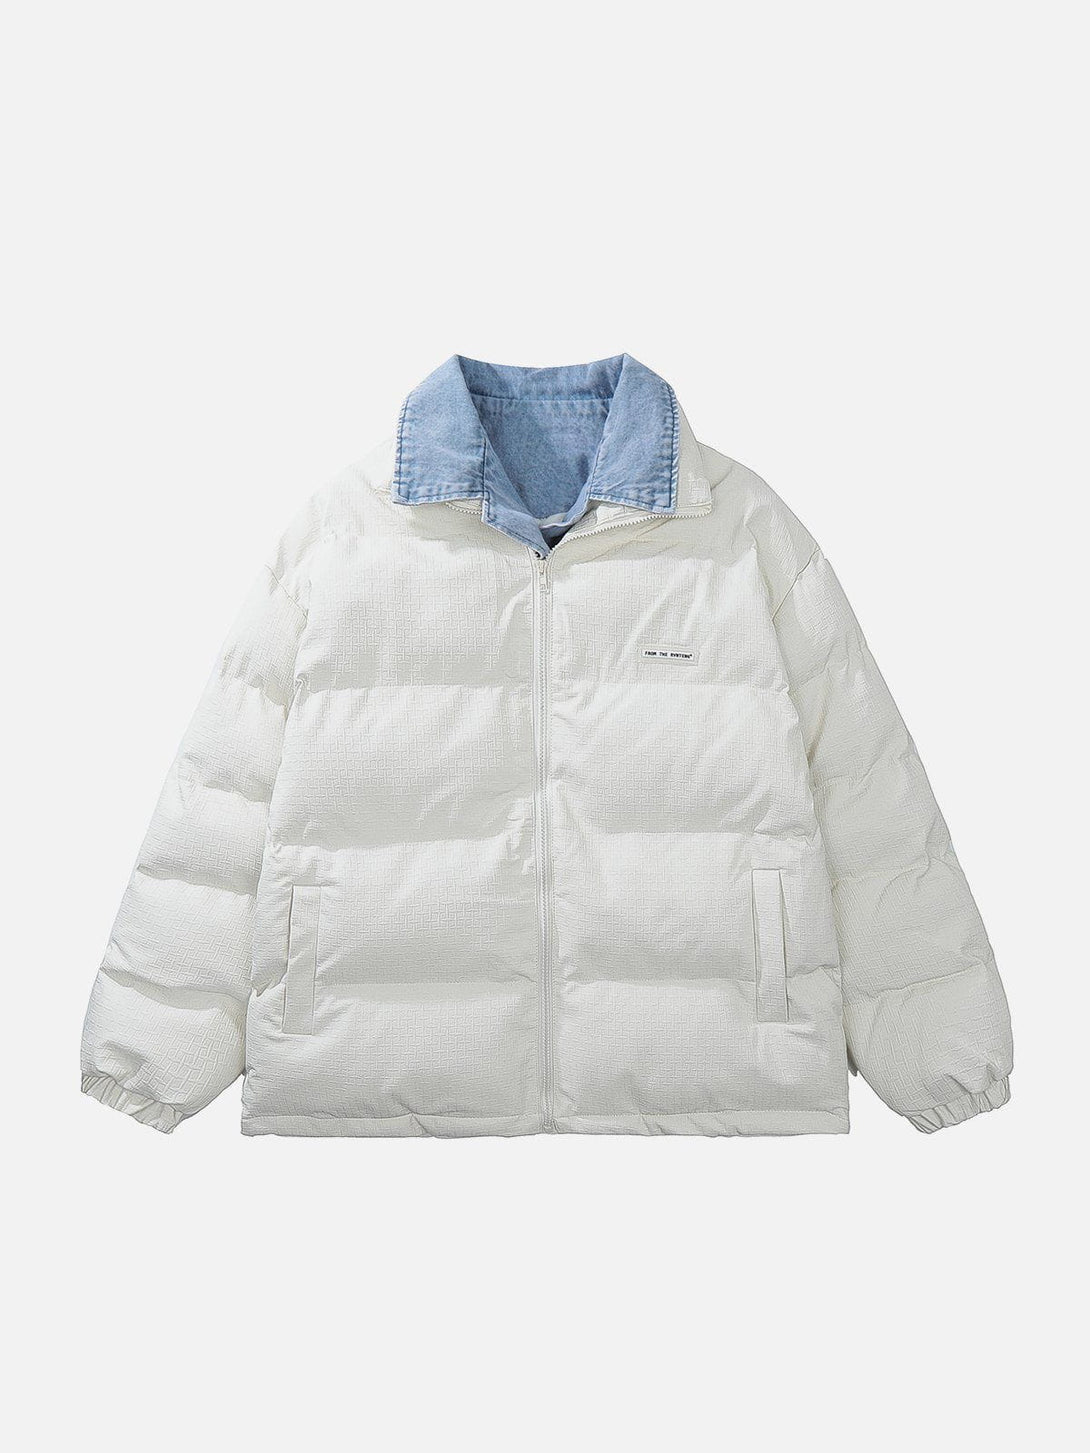 Majesda® - Fake Two Polo Collar Winter Coat outfit ideas streetwear fashion